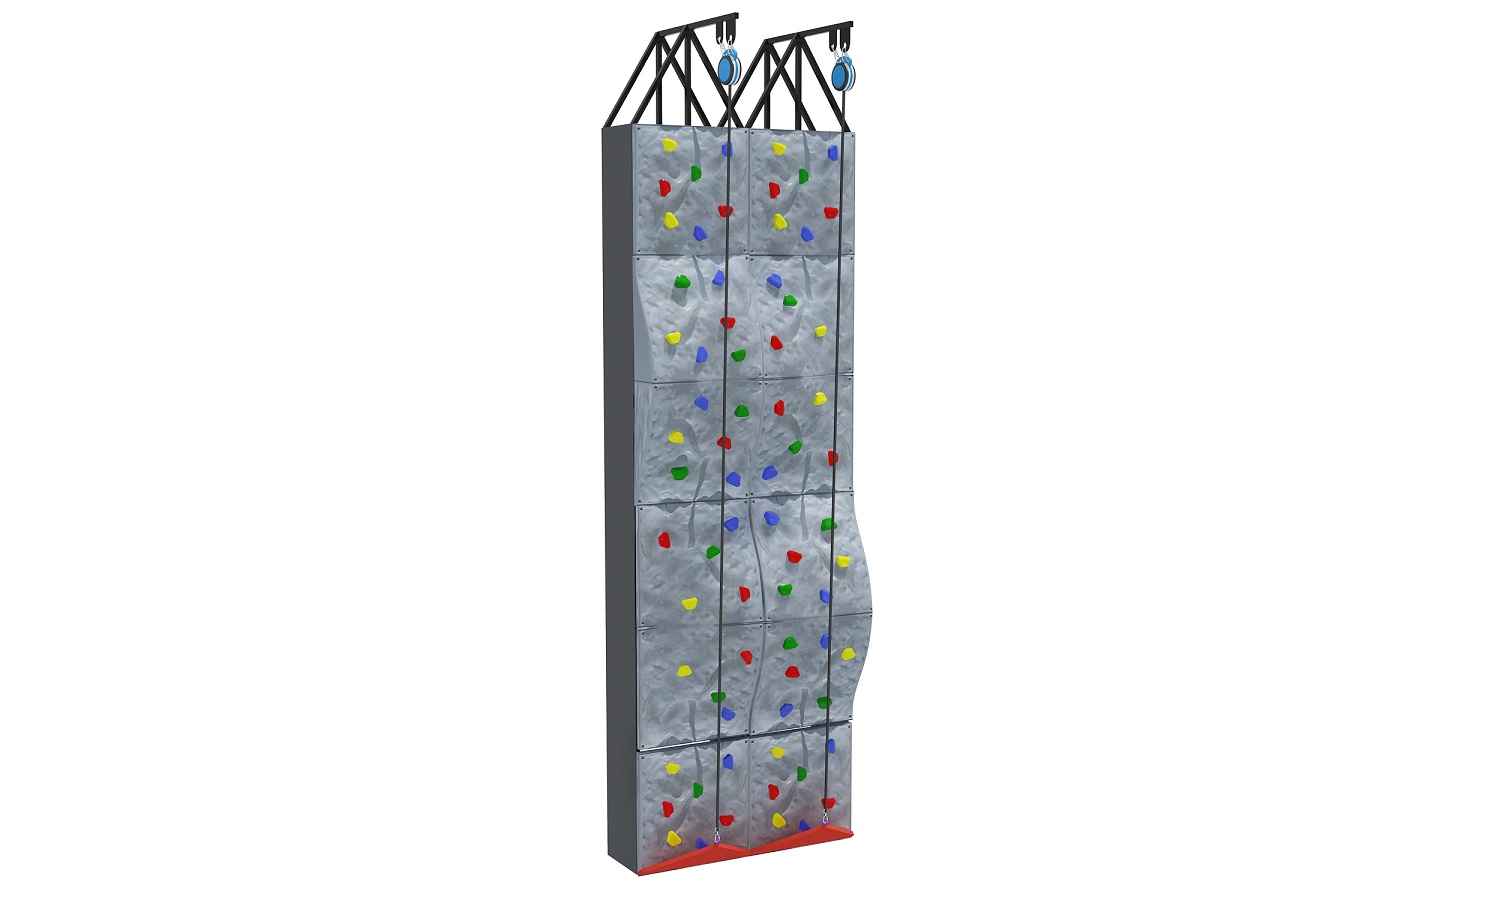 Taki Latest Design of Indoor Climbing Wall Equipment 